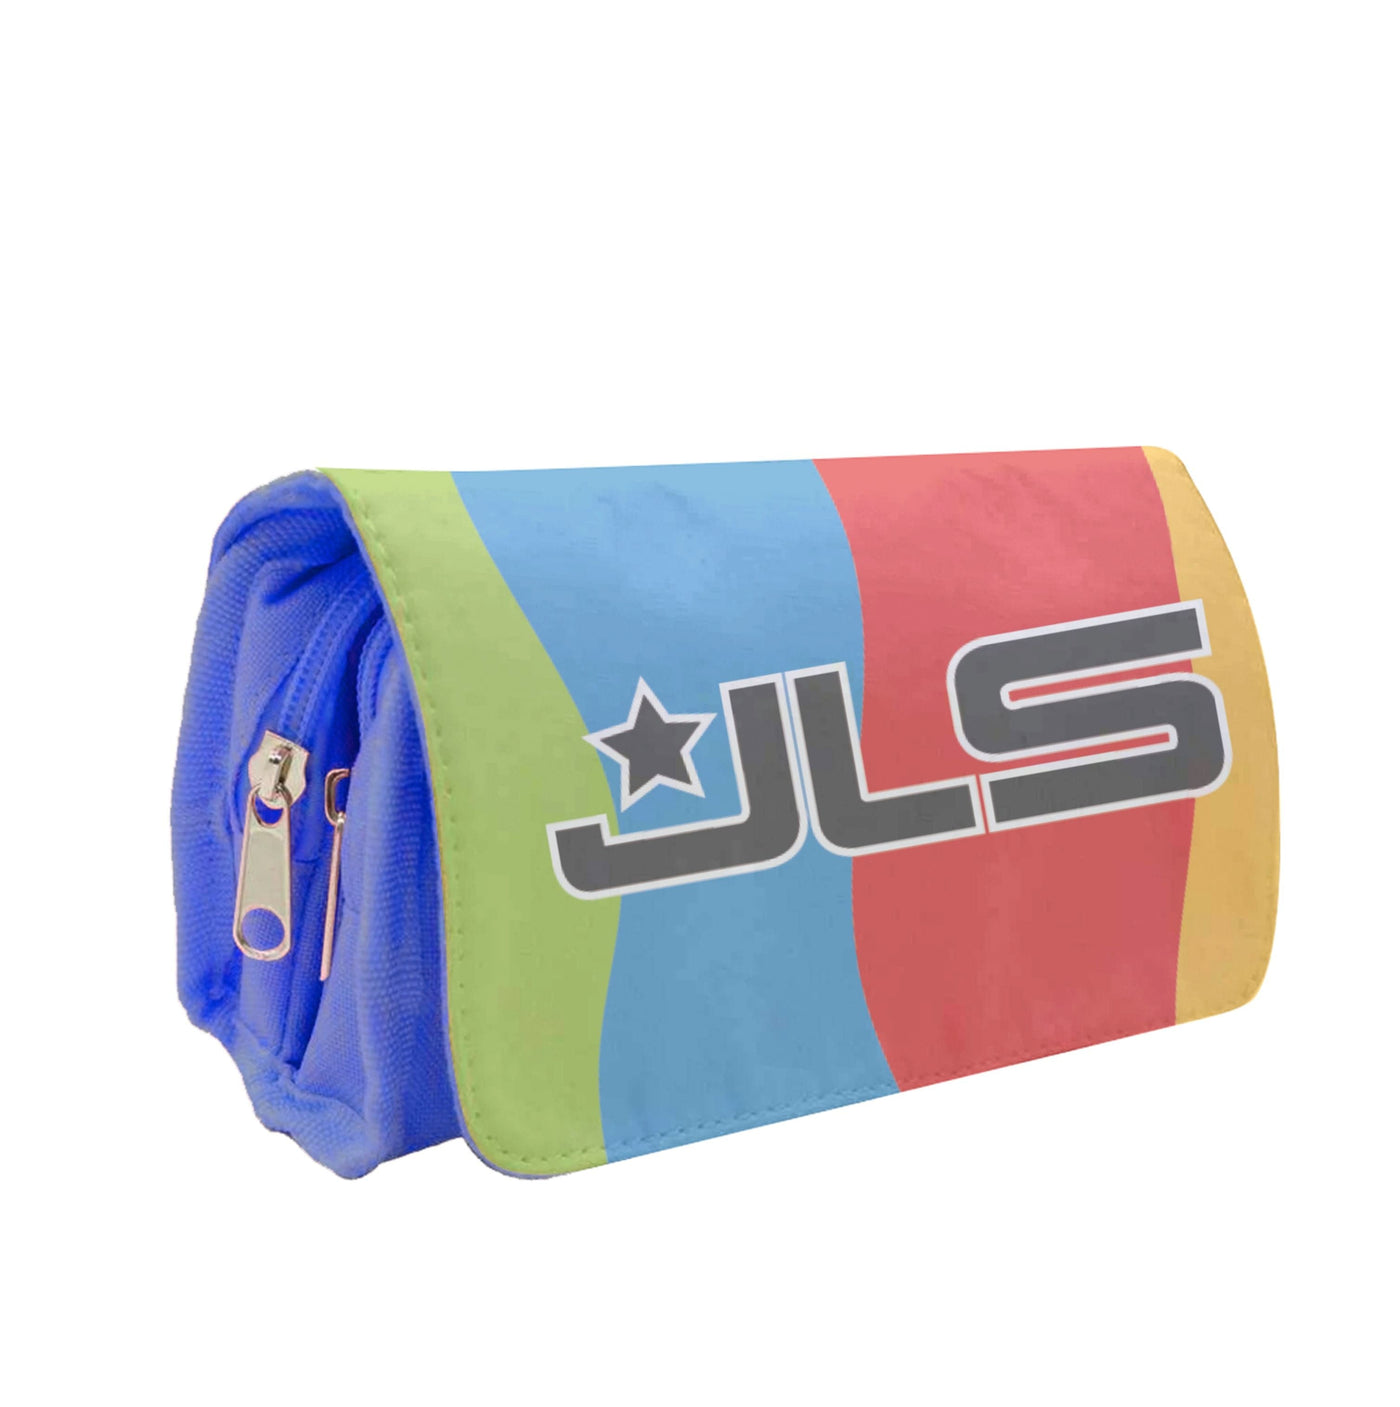 JLS logo Pencil Case